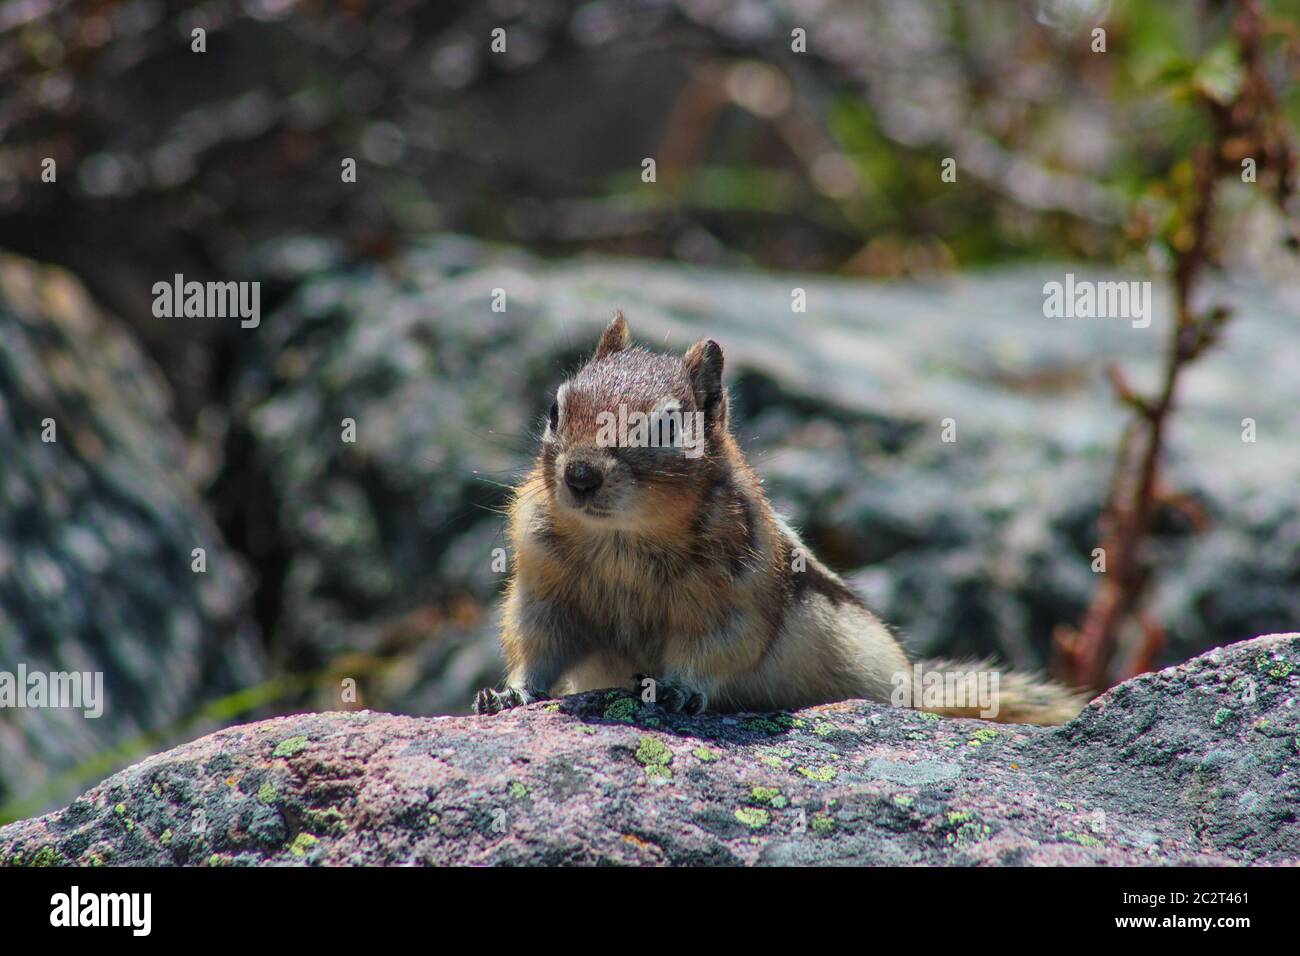 A little cute squirrel on rocks in Alberta, Canada Stock Photo